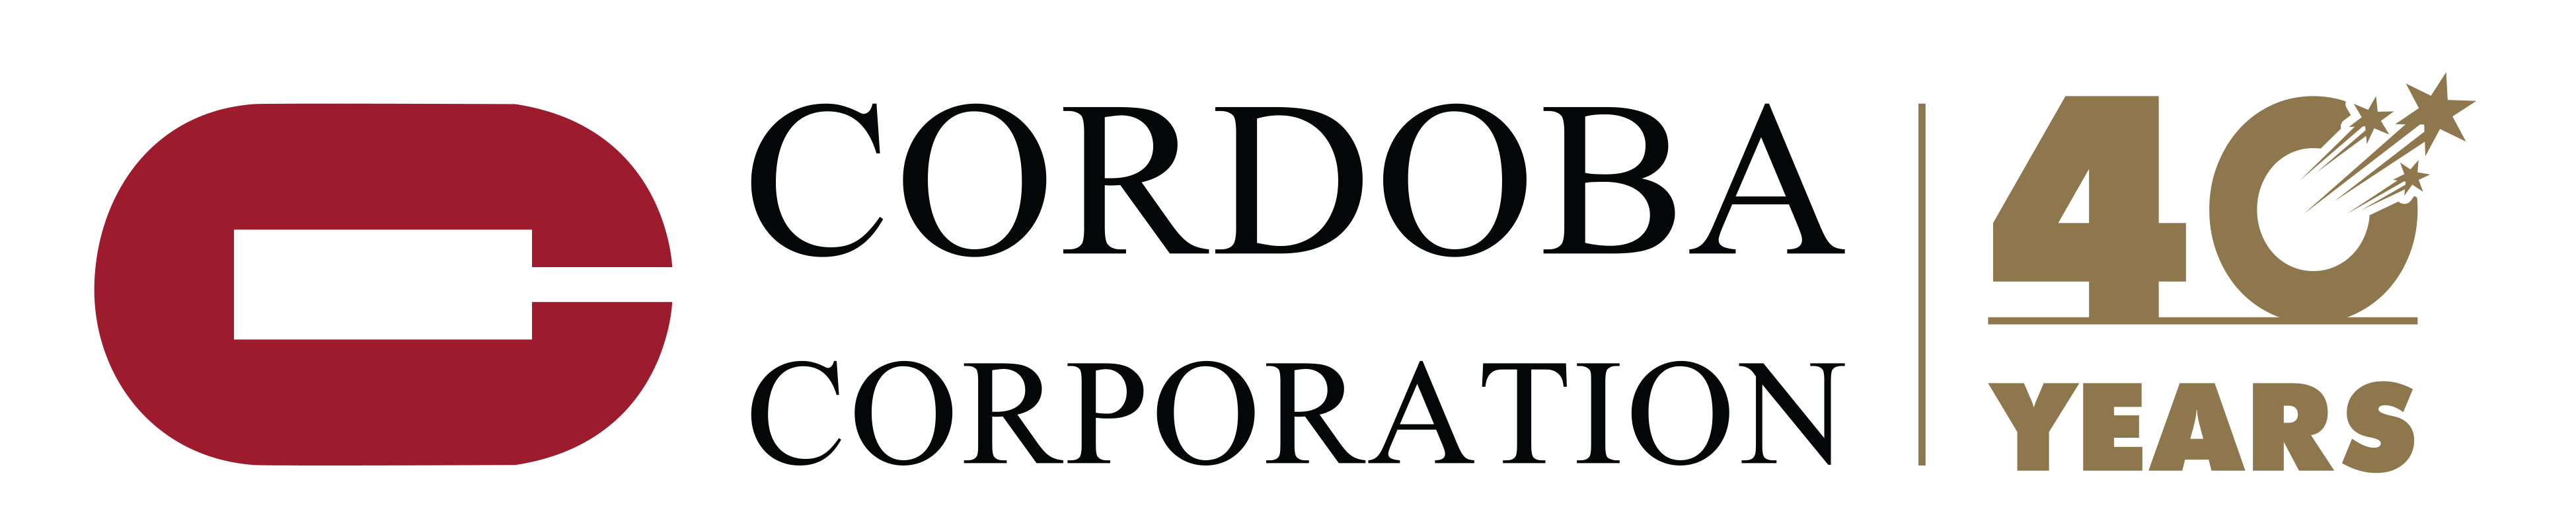 cordoba corporation logo